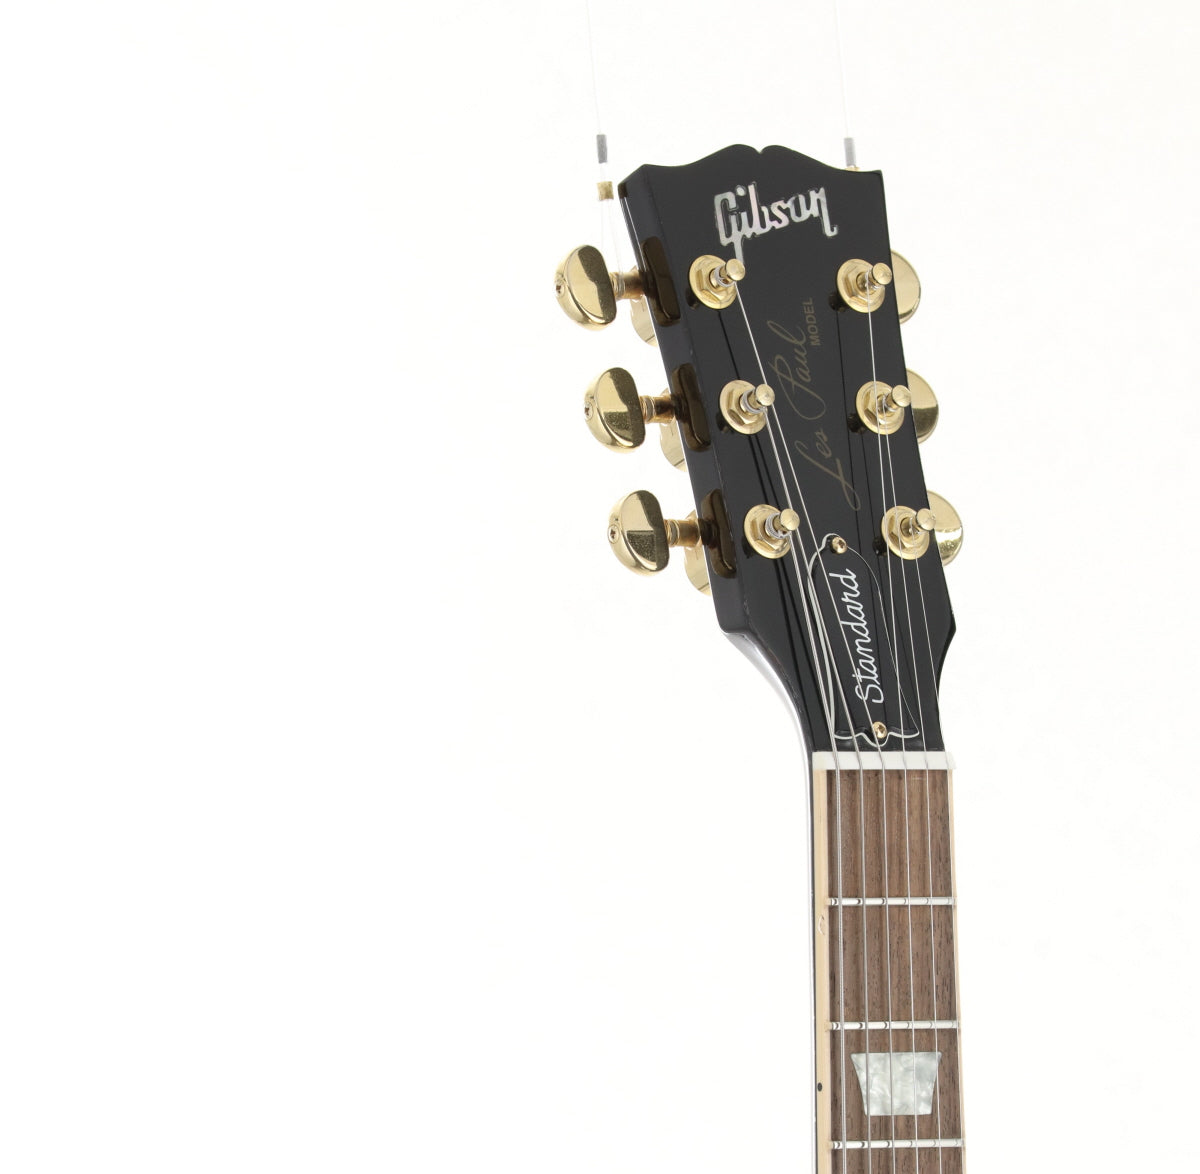 [SN 03044663] USED Gibson / LTD LP STD DC+ Desert Burst [03]